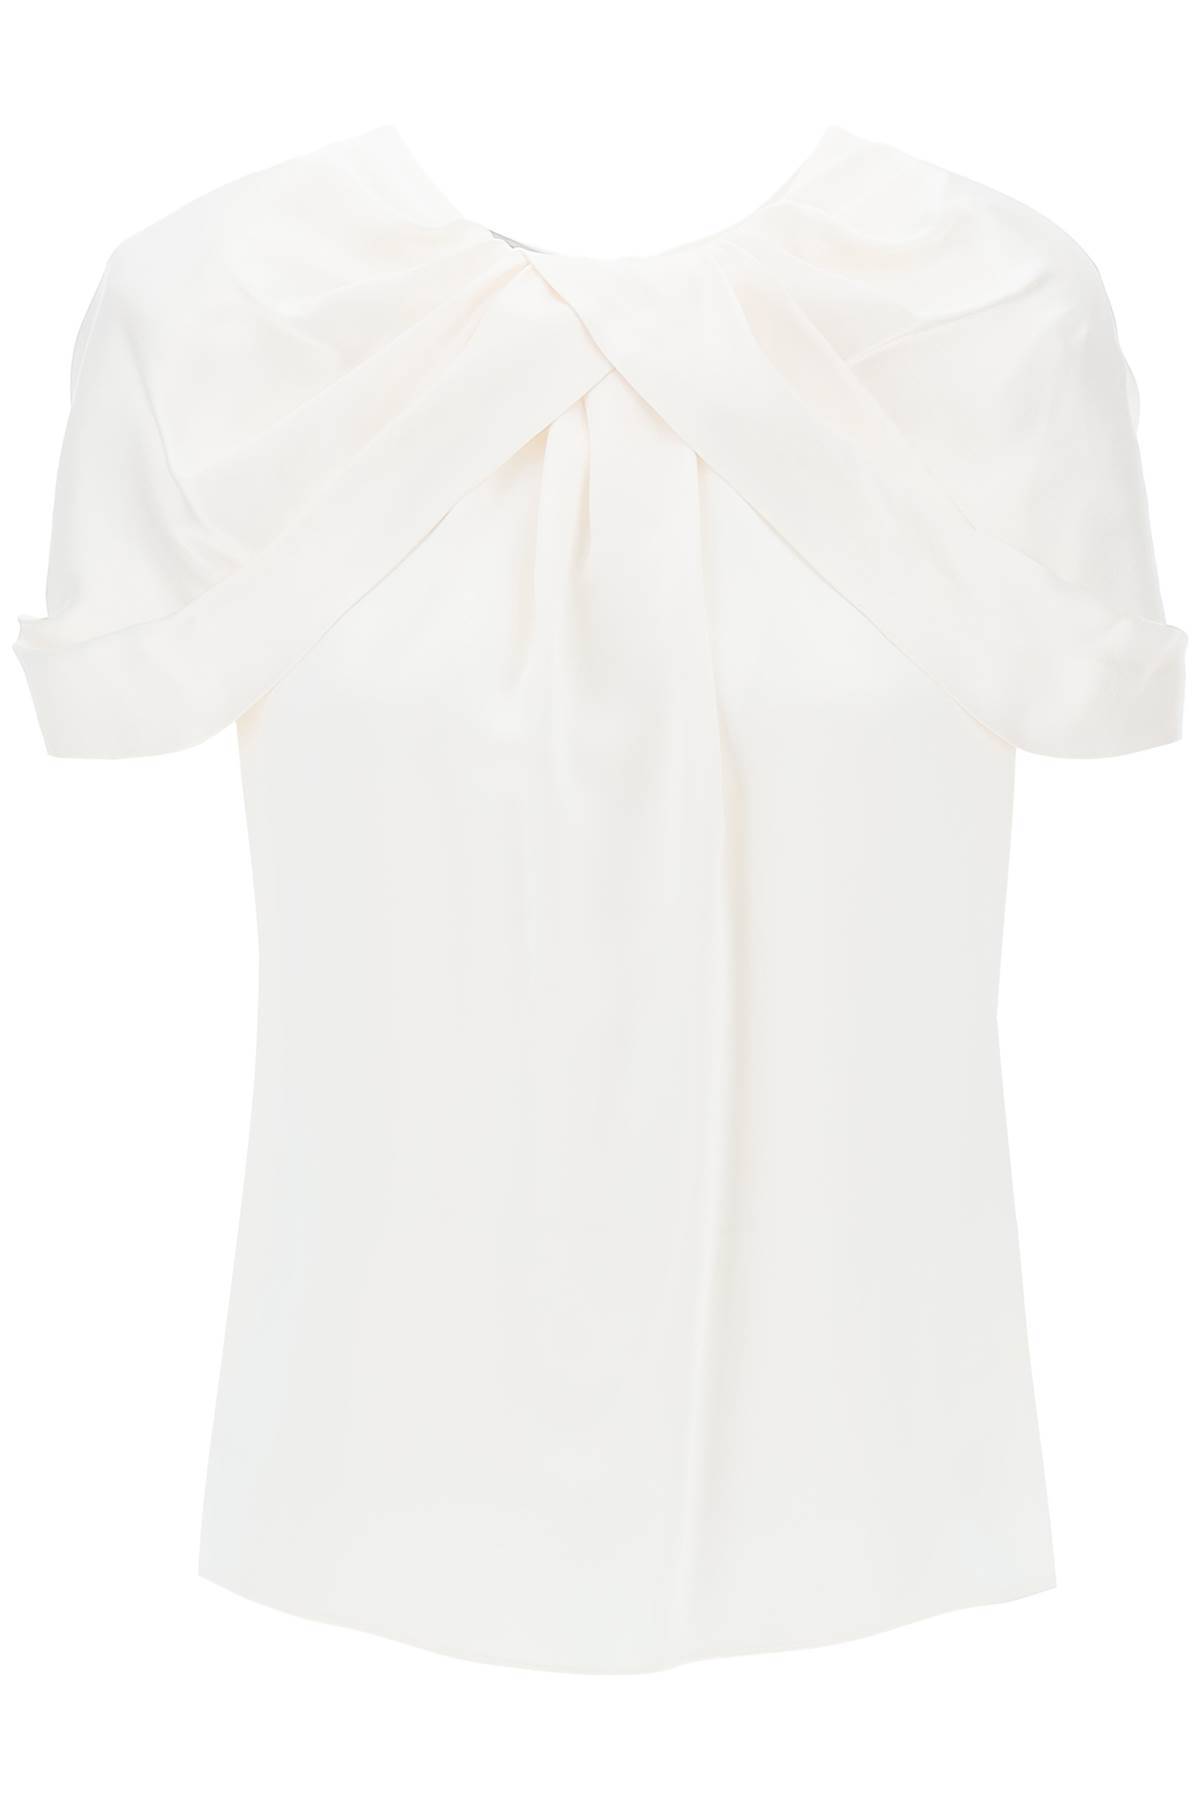 Stella McCartney STELLA McCARTNEY satin blouse with petal sleeves